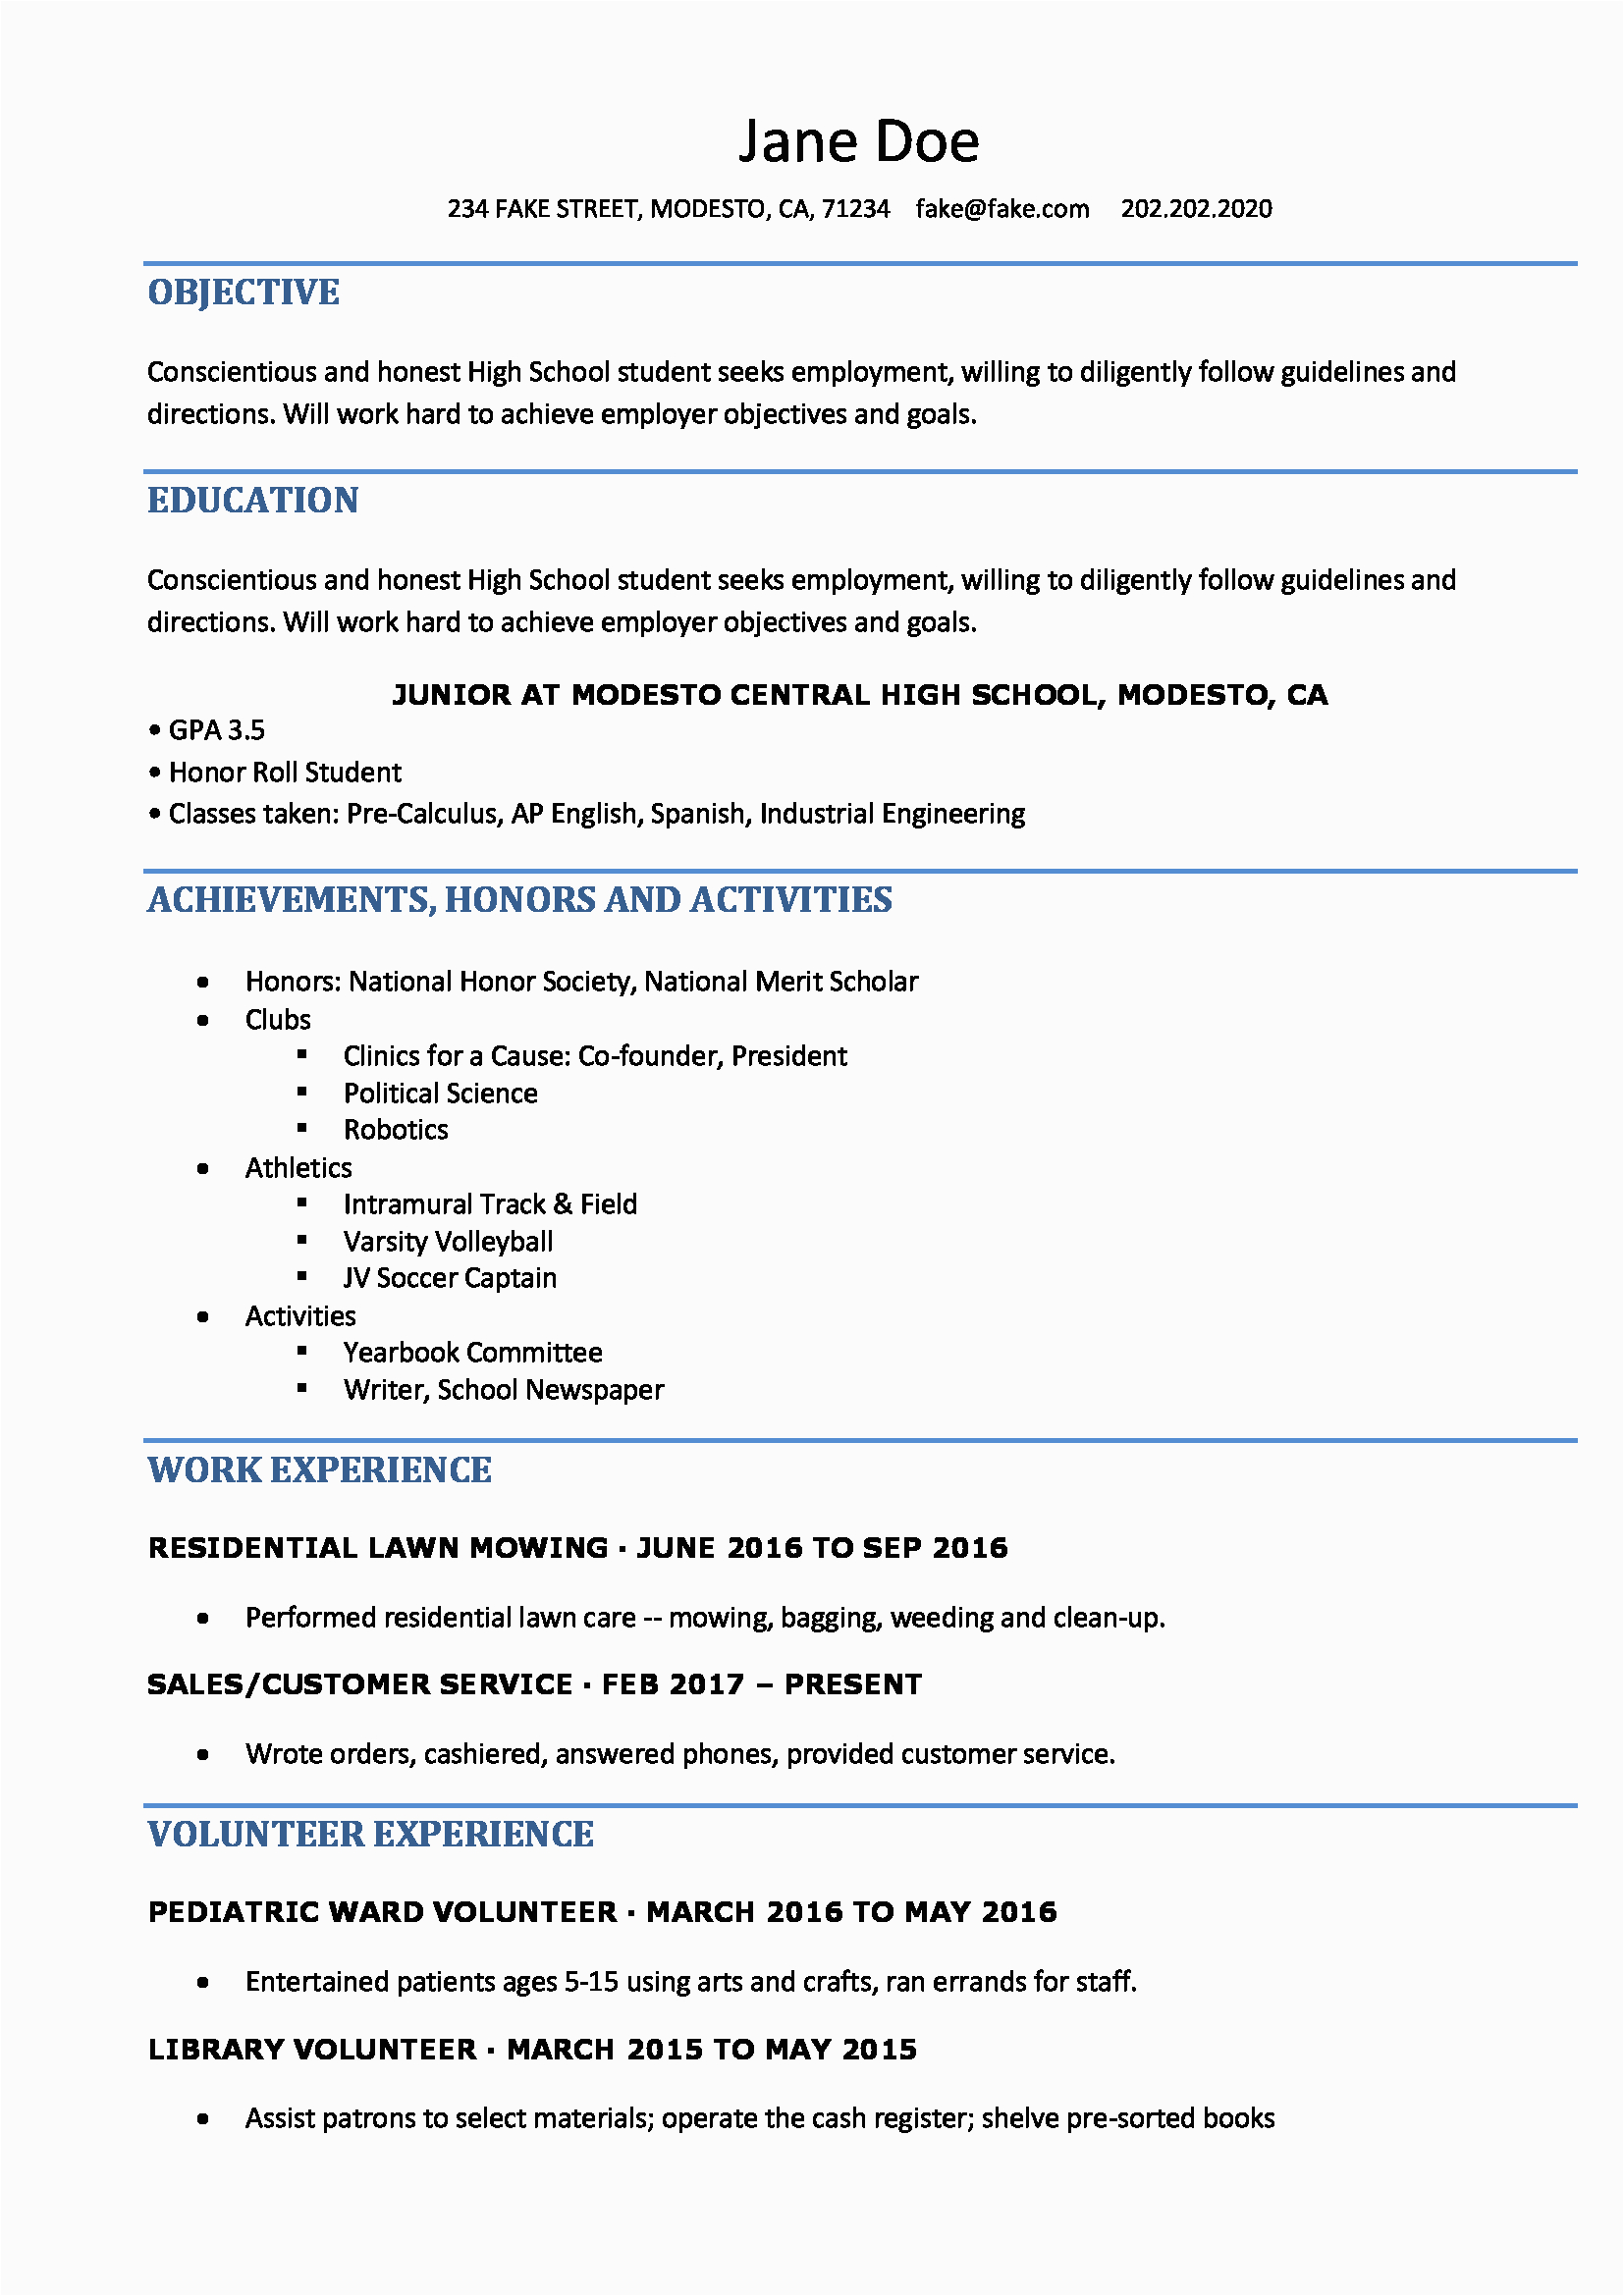 Sample Resume for A Hgh Schooler High School Resume Resume Templates for High School Students and Teens